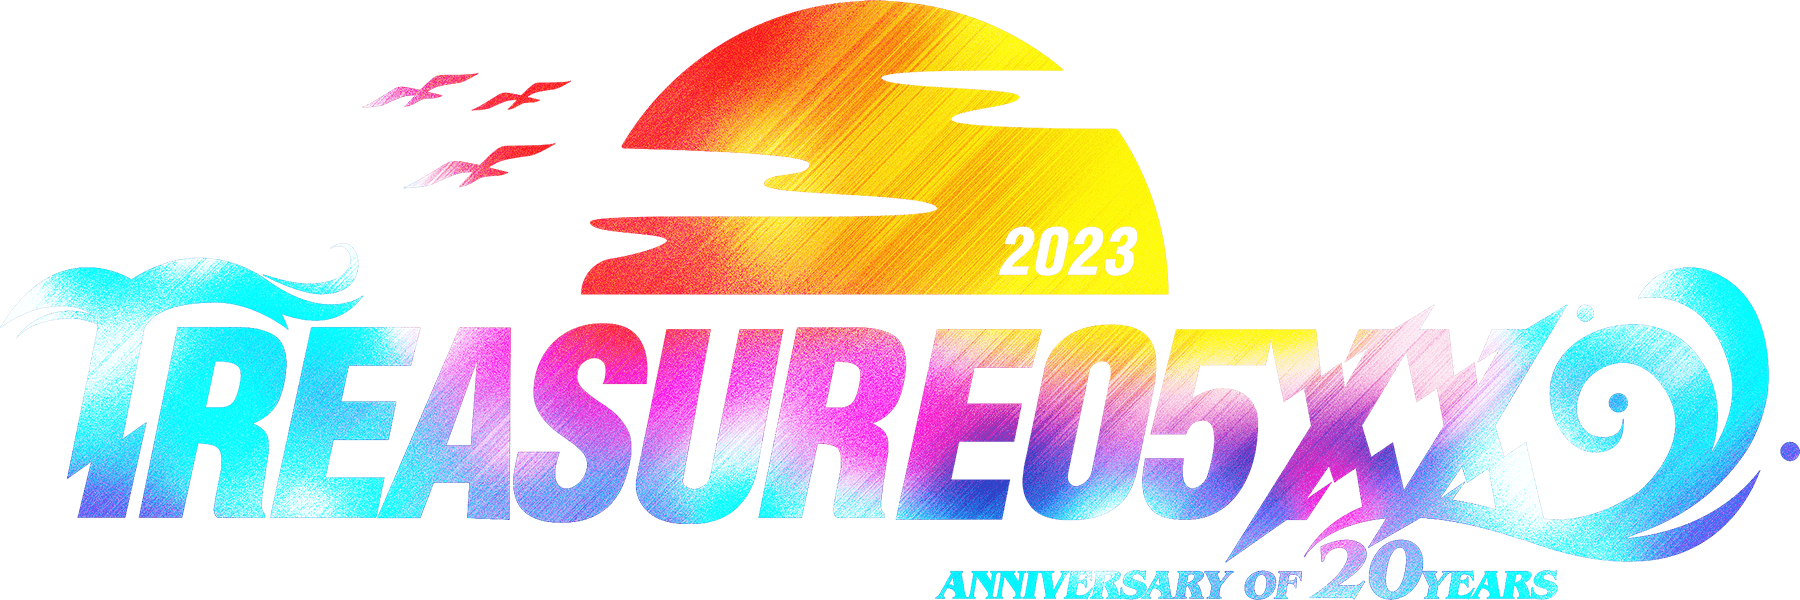 TREASURE05X 2023 -20th Anniversary-